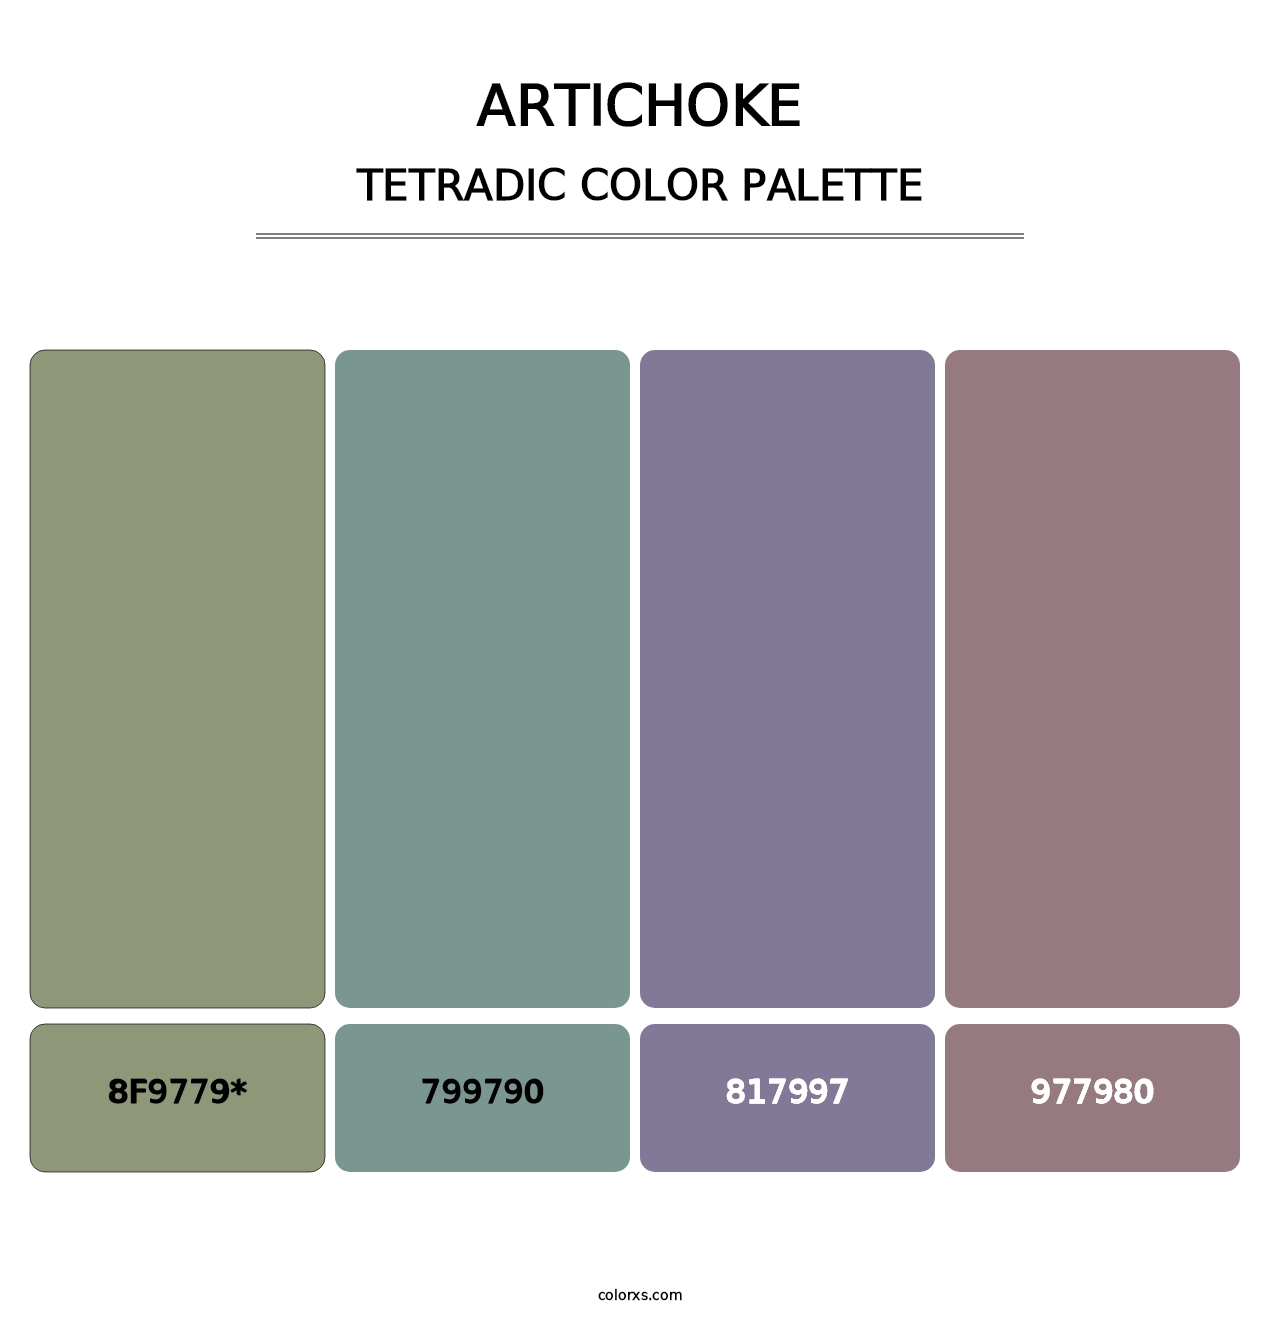 Artichoke - Tetradic Color Palette